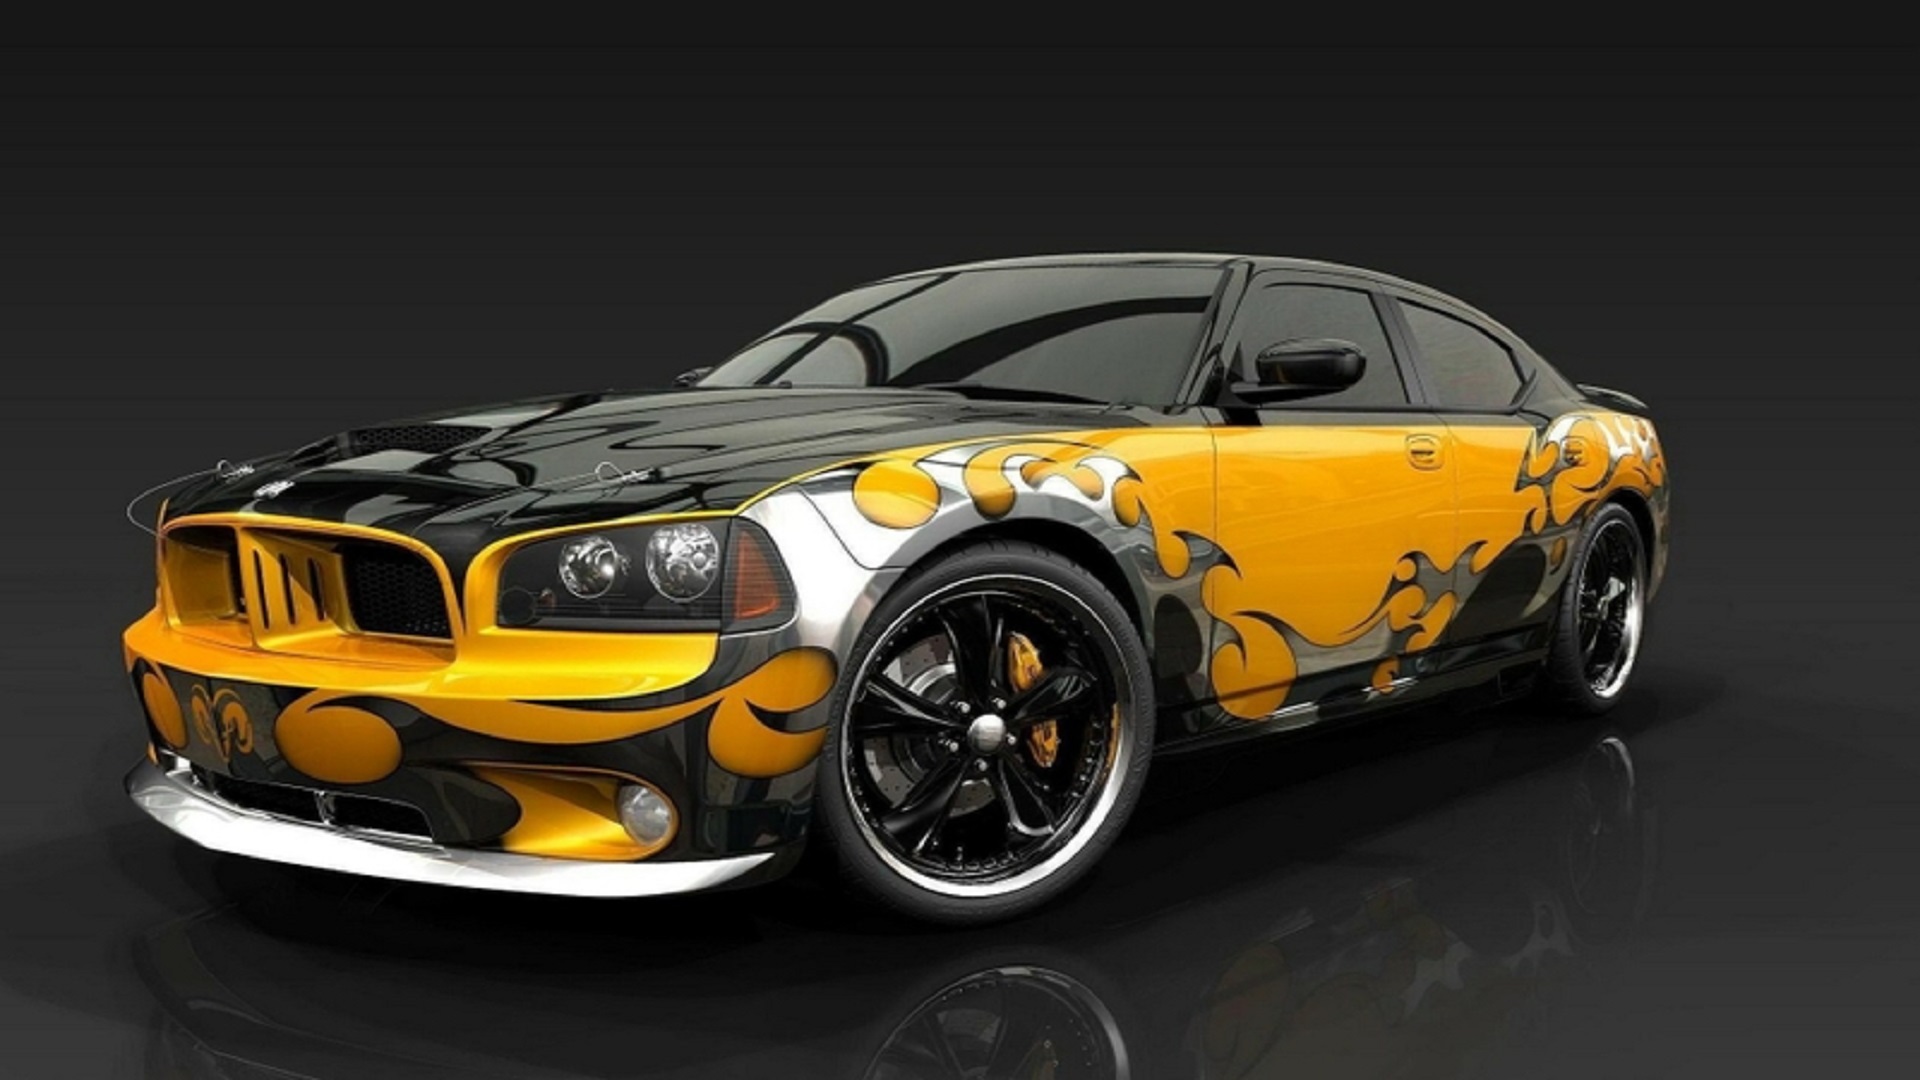 cars wallpaper hd for desktop,land vehicle,vehicle,car,motor vehicle,yellow